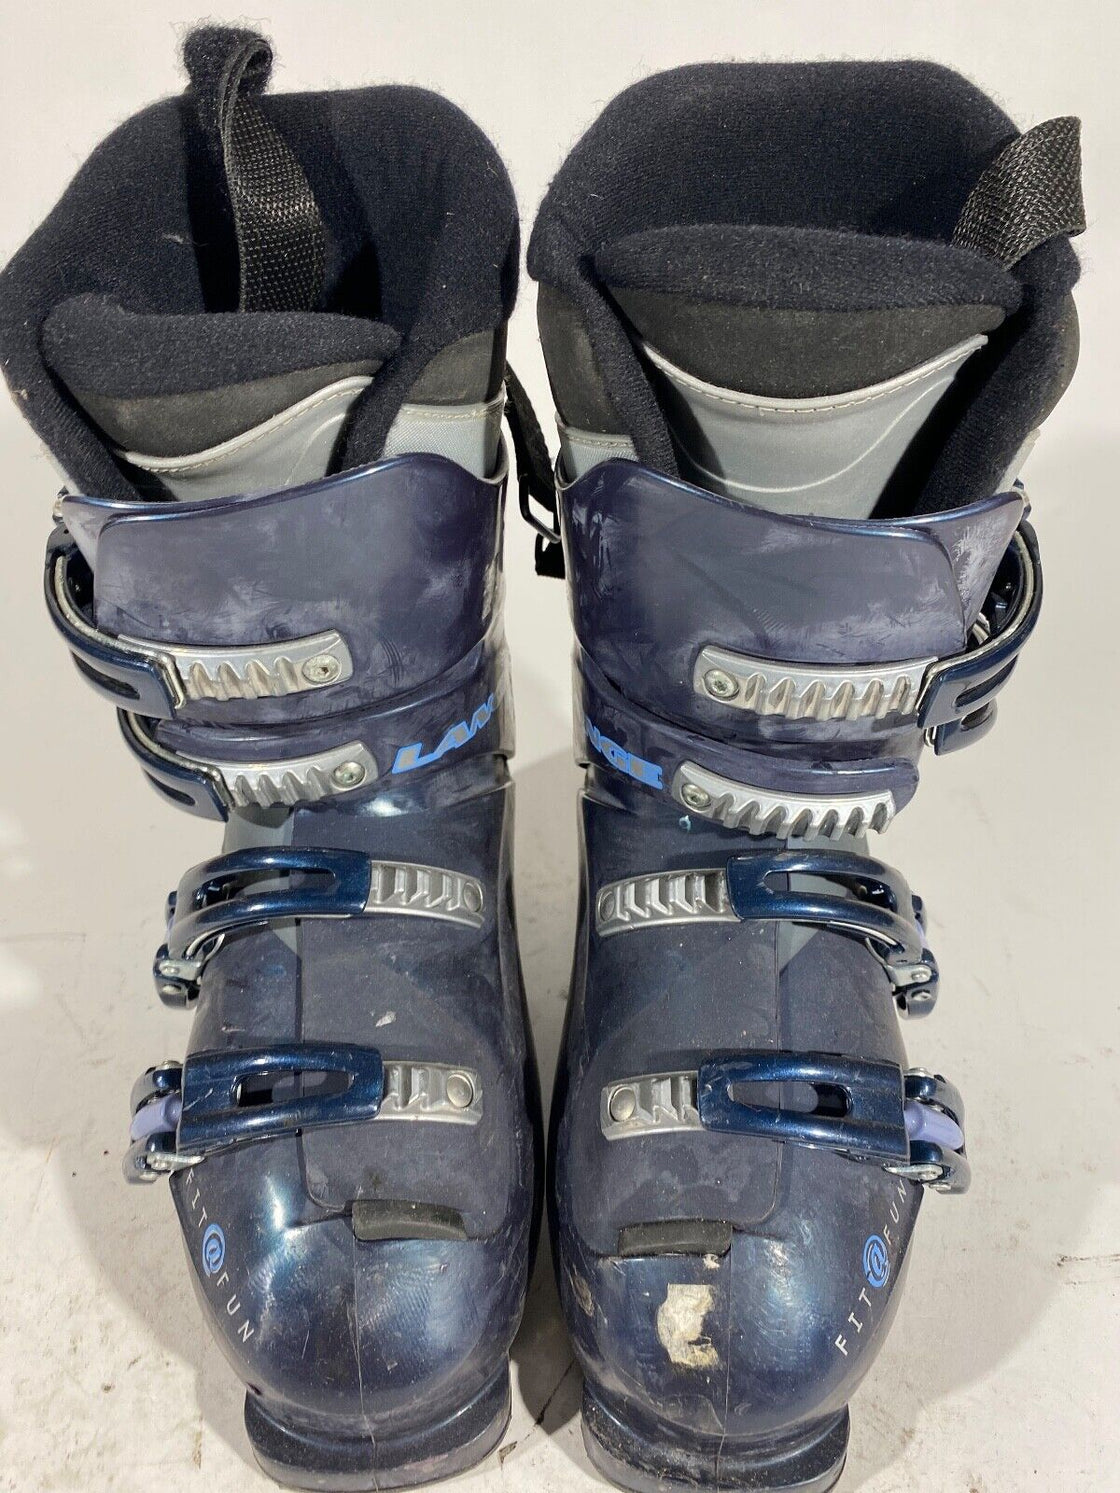 LANGE Alpine Ski Boots Downhill Size Mondo 245 mm, Outer Sole 288 mm